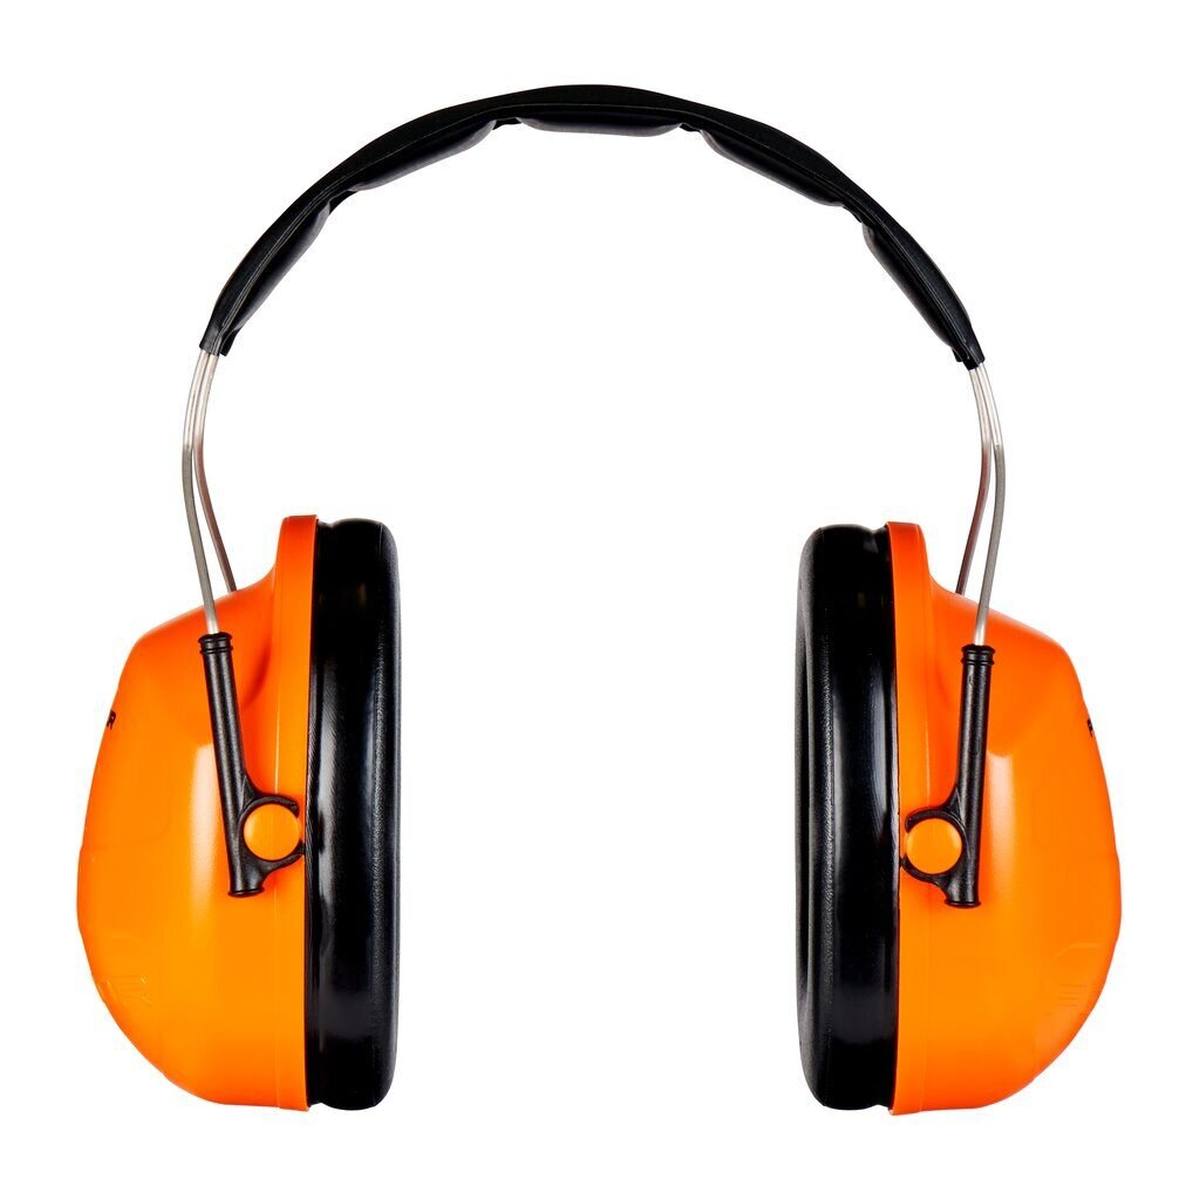 3M Peltor Kapselgehörschutz, Kopfbügel, orange, SNR = 27 dB, H31A